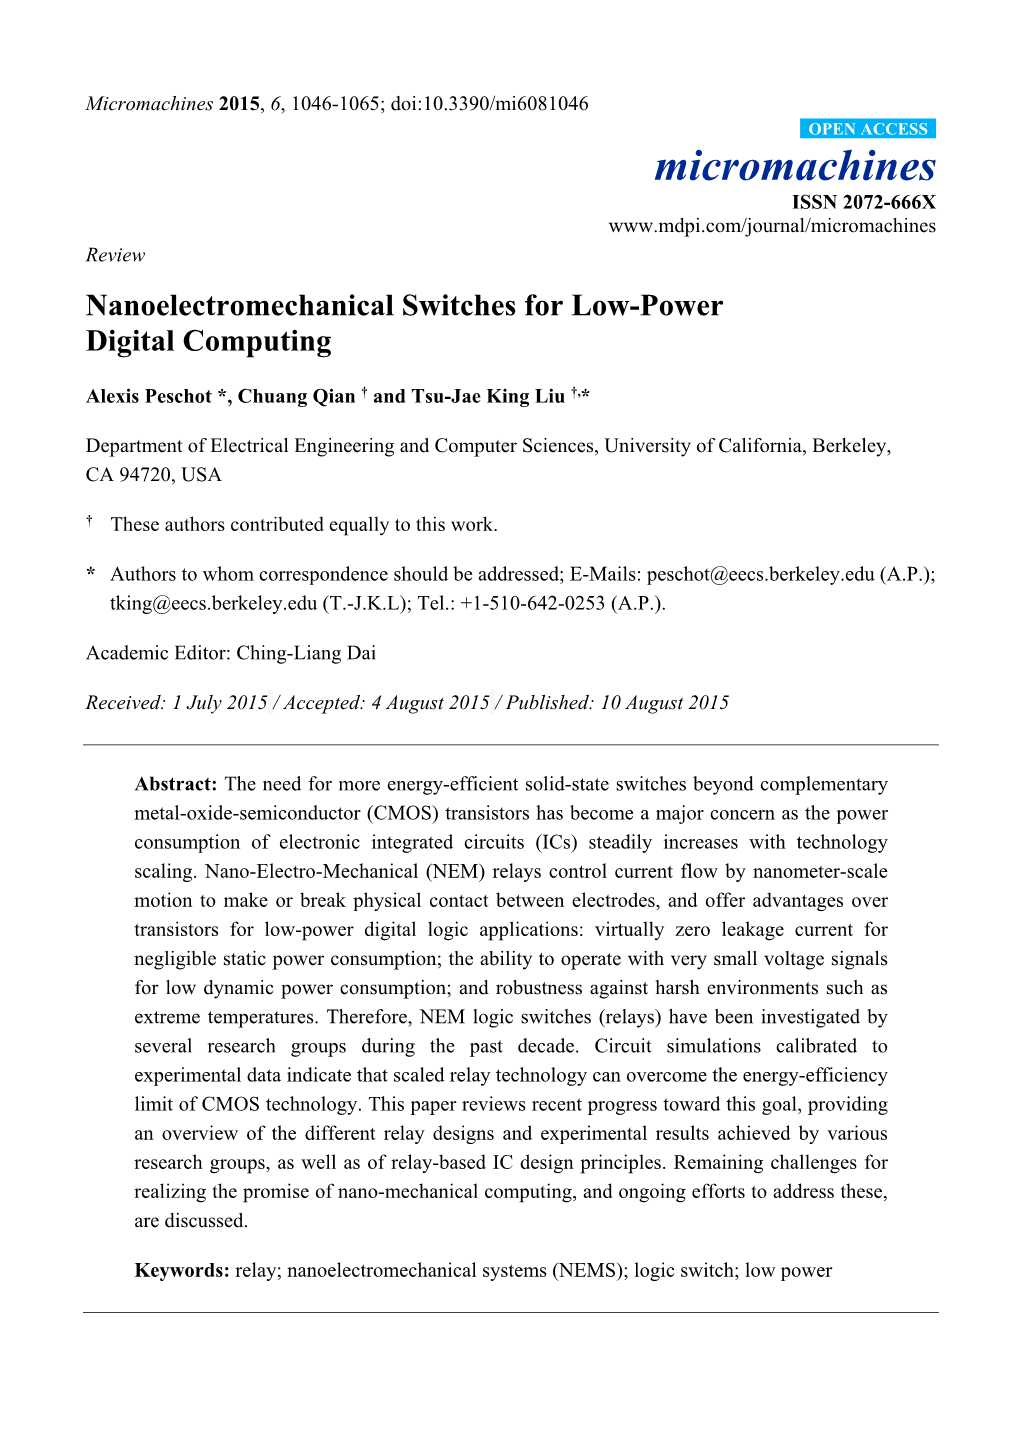 Nanoelectromechanical Switches for Low-Power Digital Computing